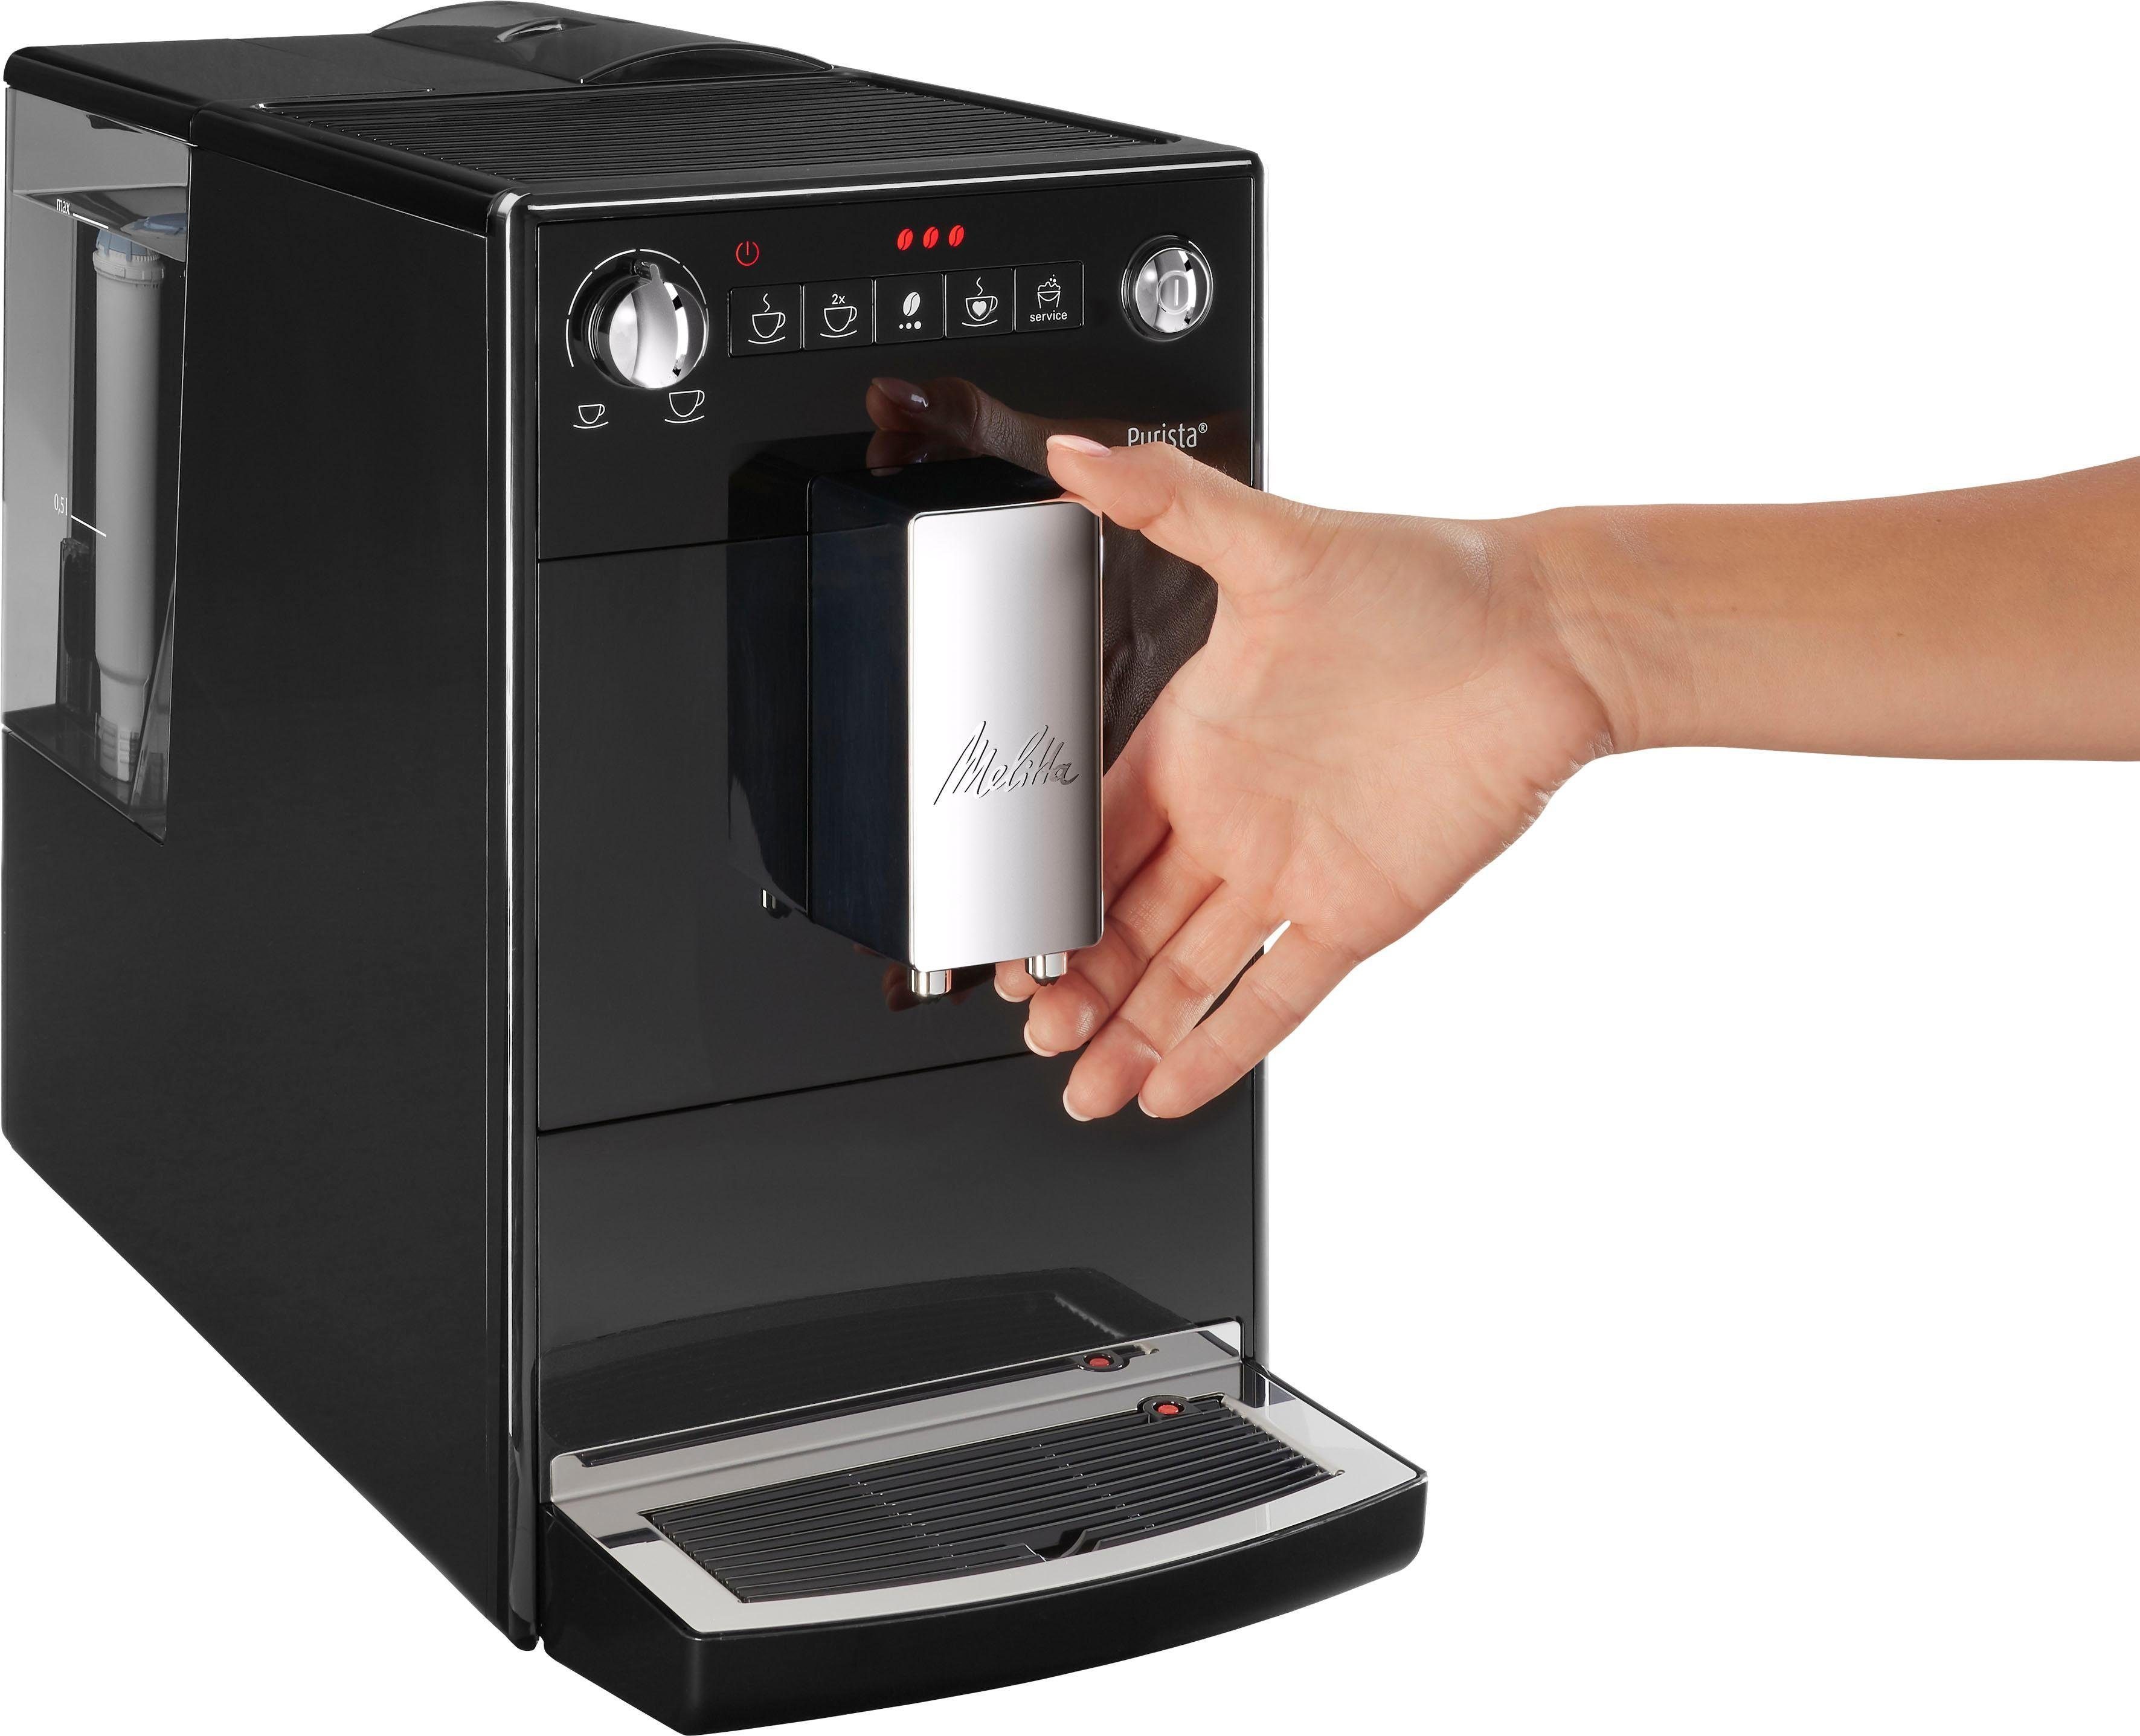 & Kaffeevollautomat Purista® leise F230-102, kompakt extra Lieblingskaffee-Funktion, schwarz, Melitta